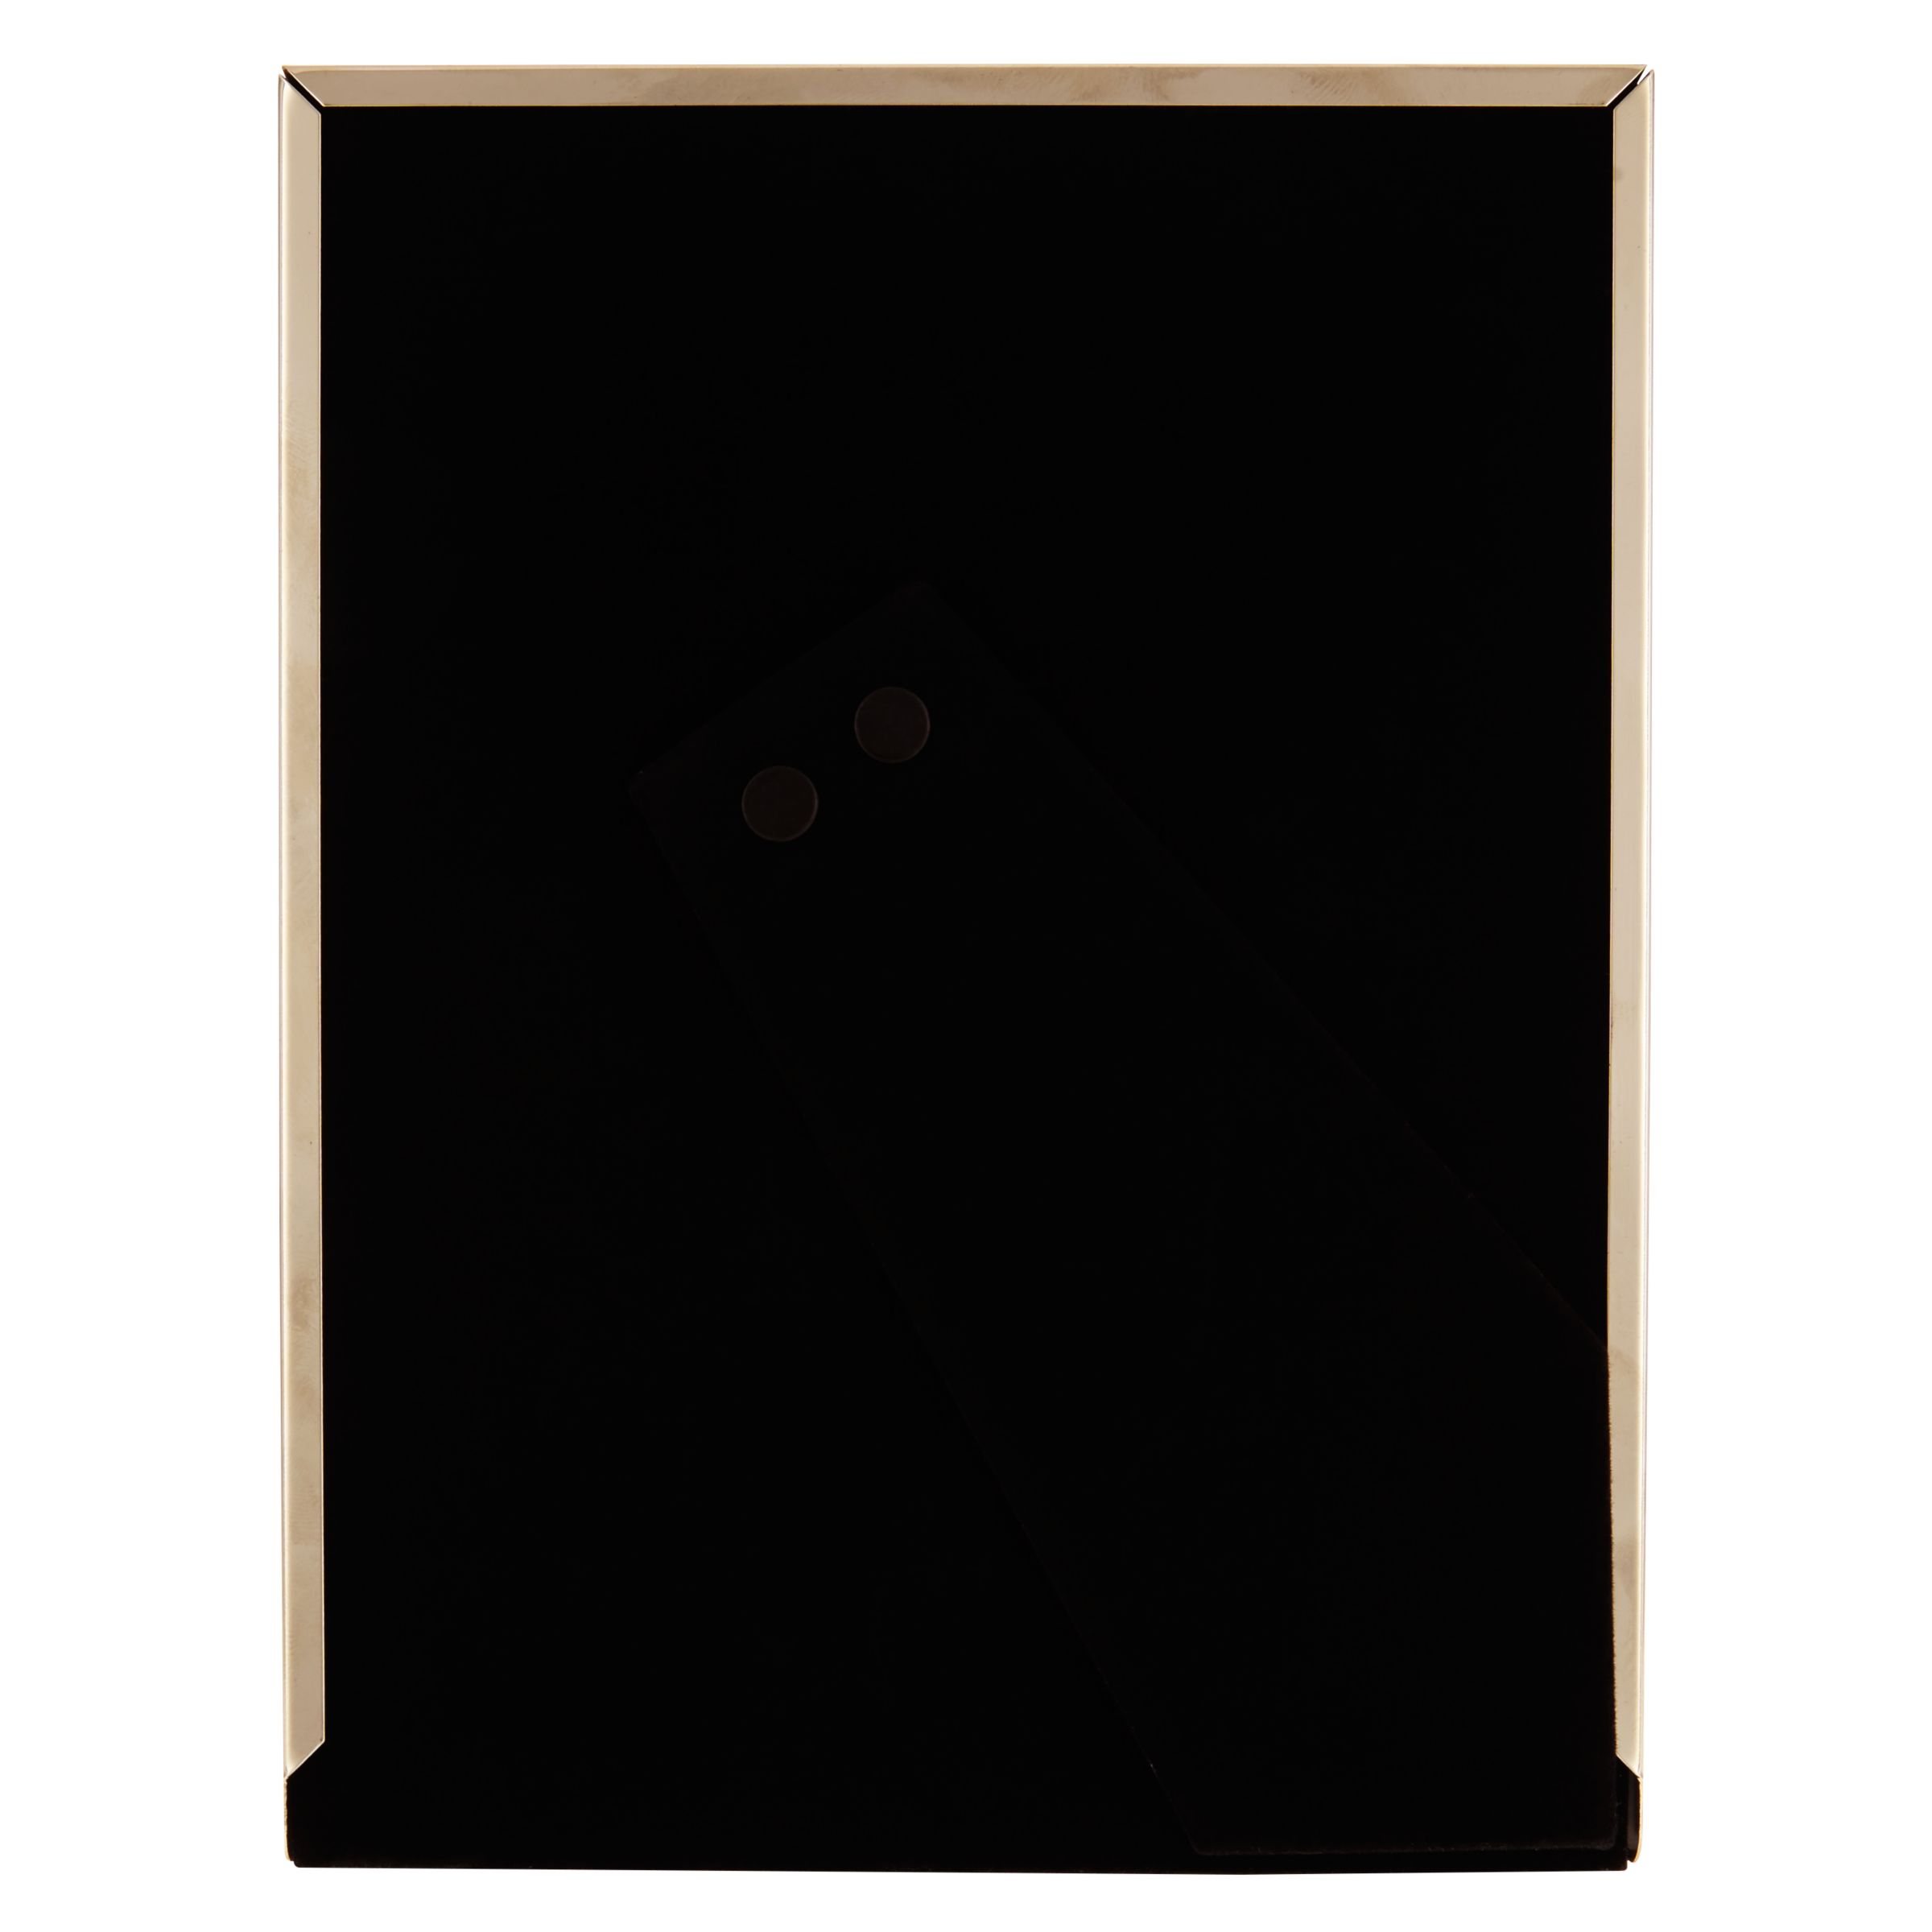 John Lewis & Partners Boutique Photo Frame, Black/Gold, 5 x 7